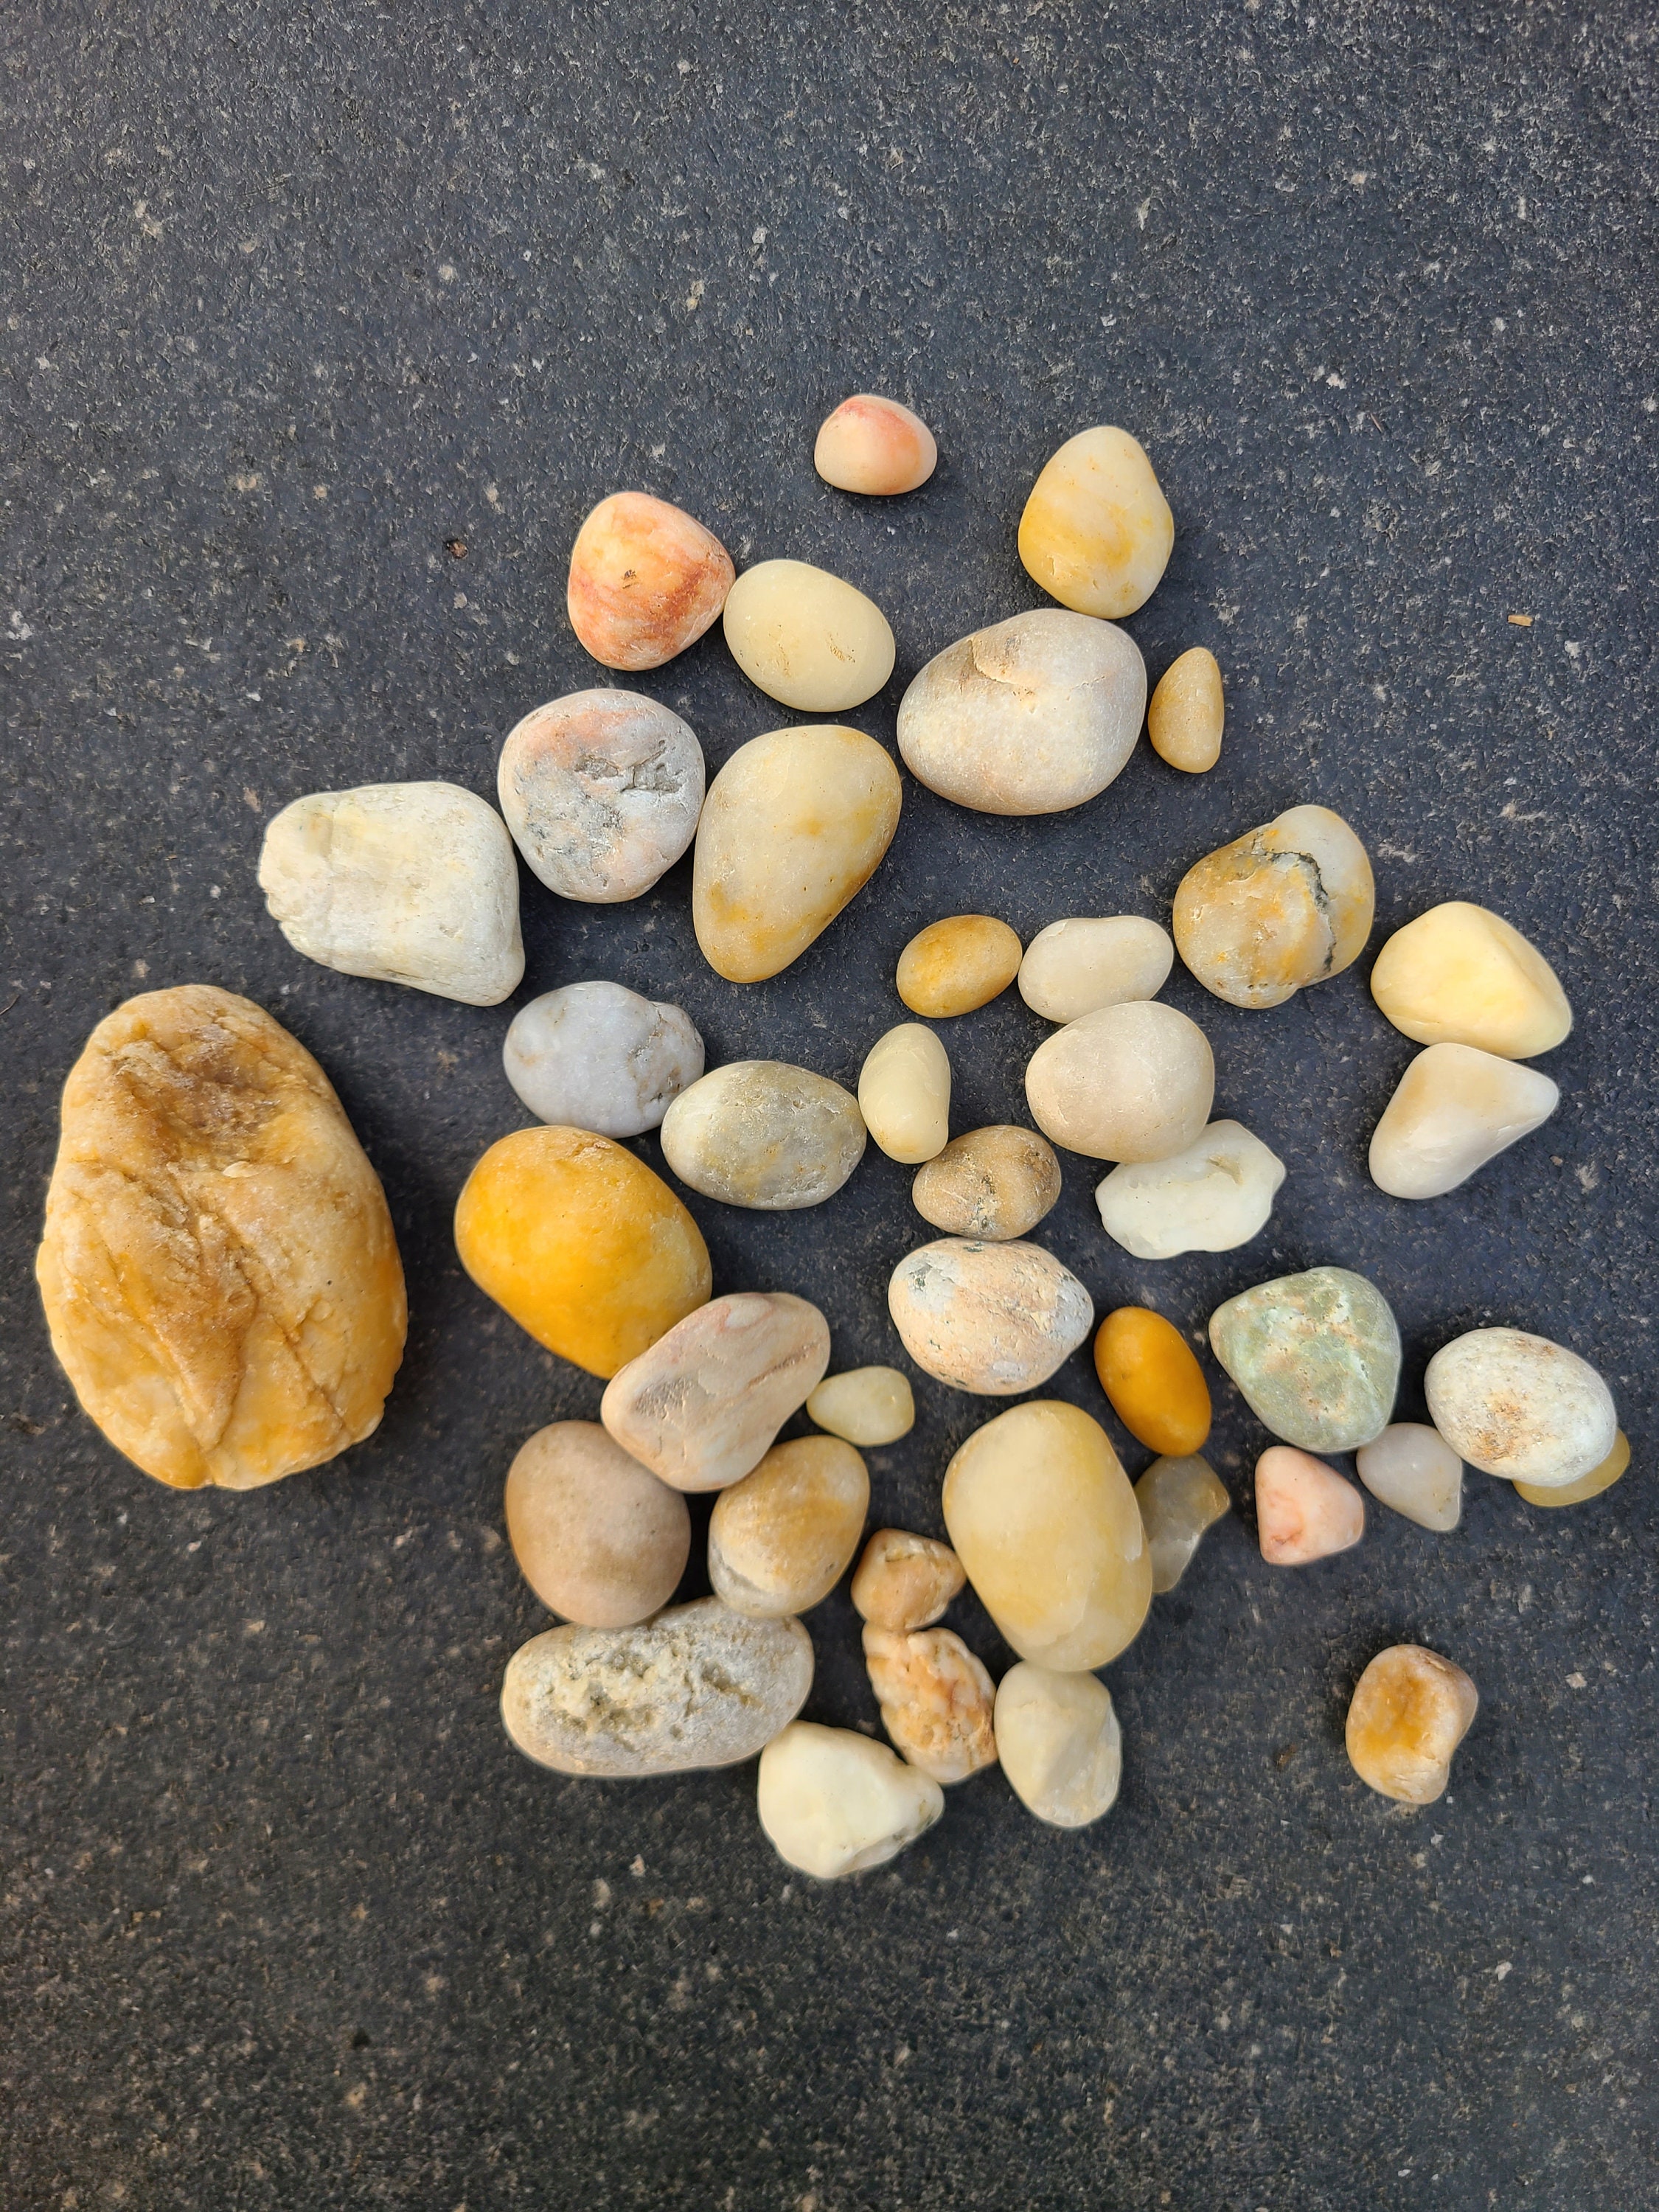 50 Grey/brown Flat Rocks, 1 Inch to 2 Inch Flat Stones, Cairn Stones, PNW,  Wedding Stone, Beach Rocks, Mother Nature,ooak,rocks 